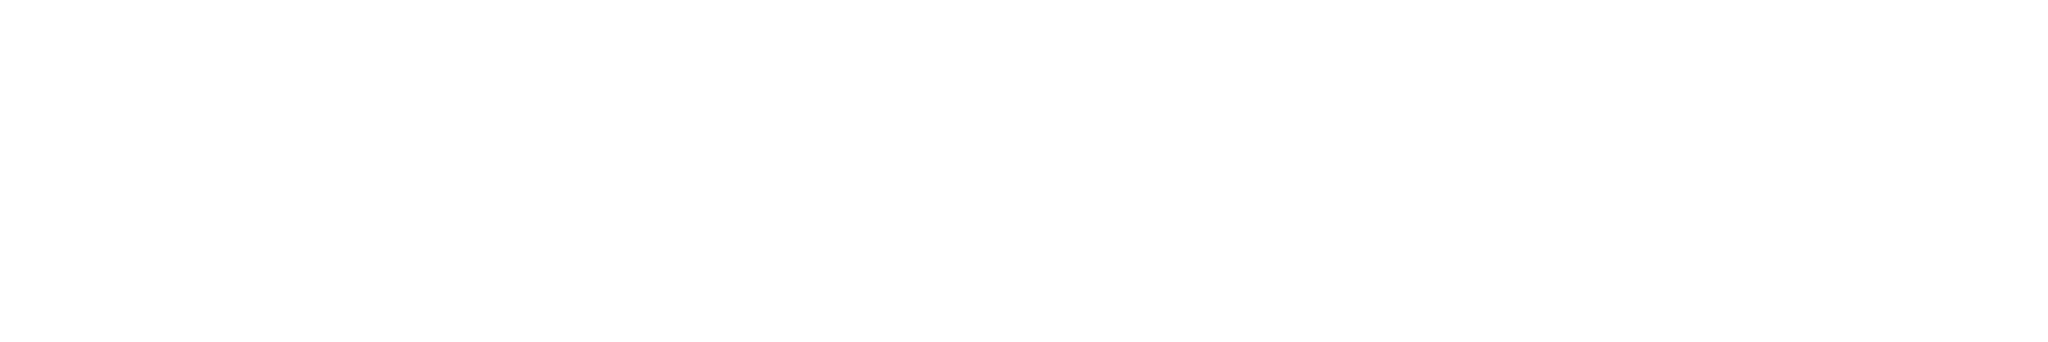 Megacable_logo.svg white